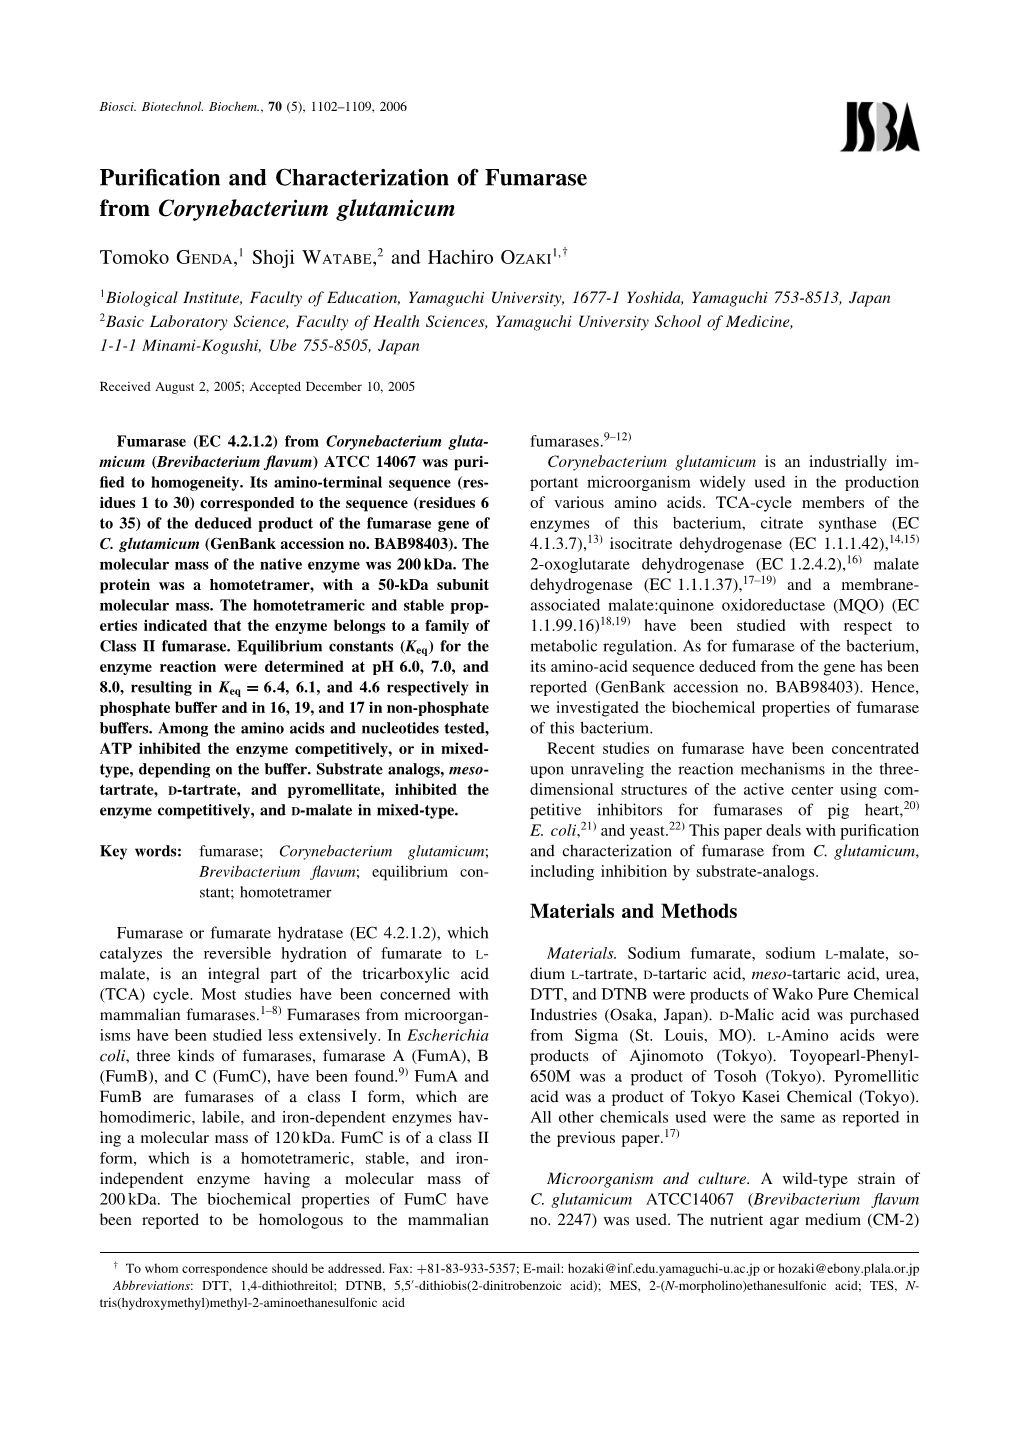 Purification and Characterization of Fumarase from Corynebacterium